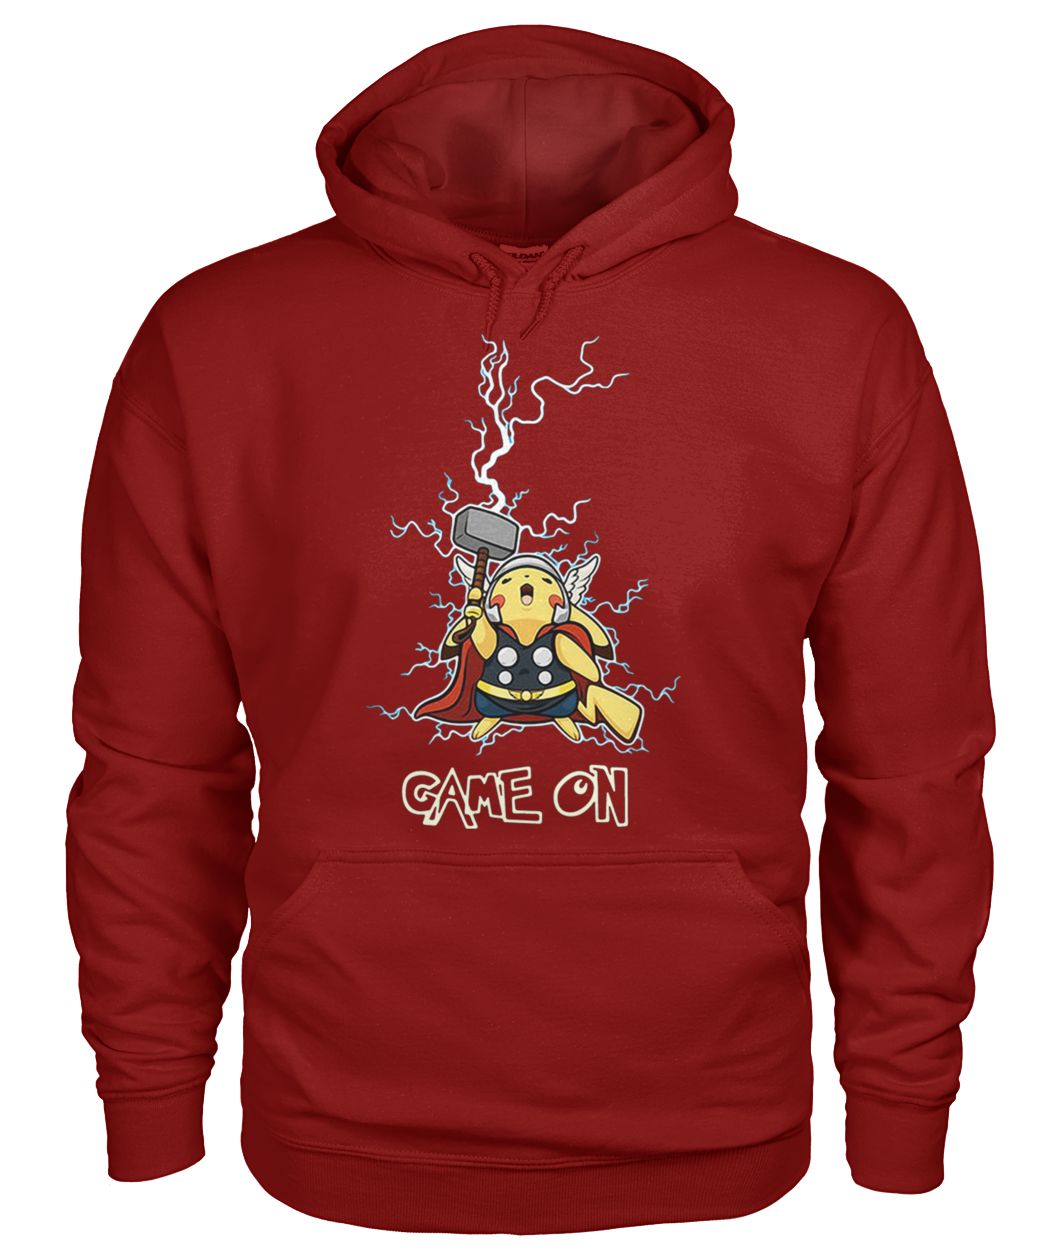 Pikachu being the god of thunder thor game on gildan hoodie